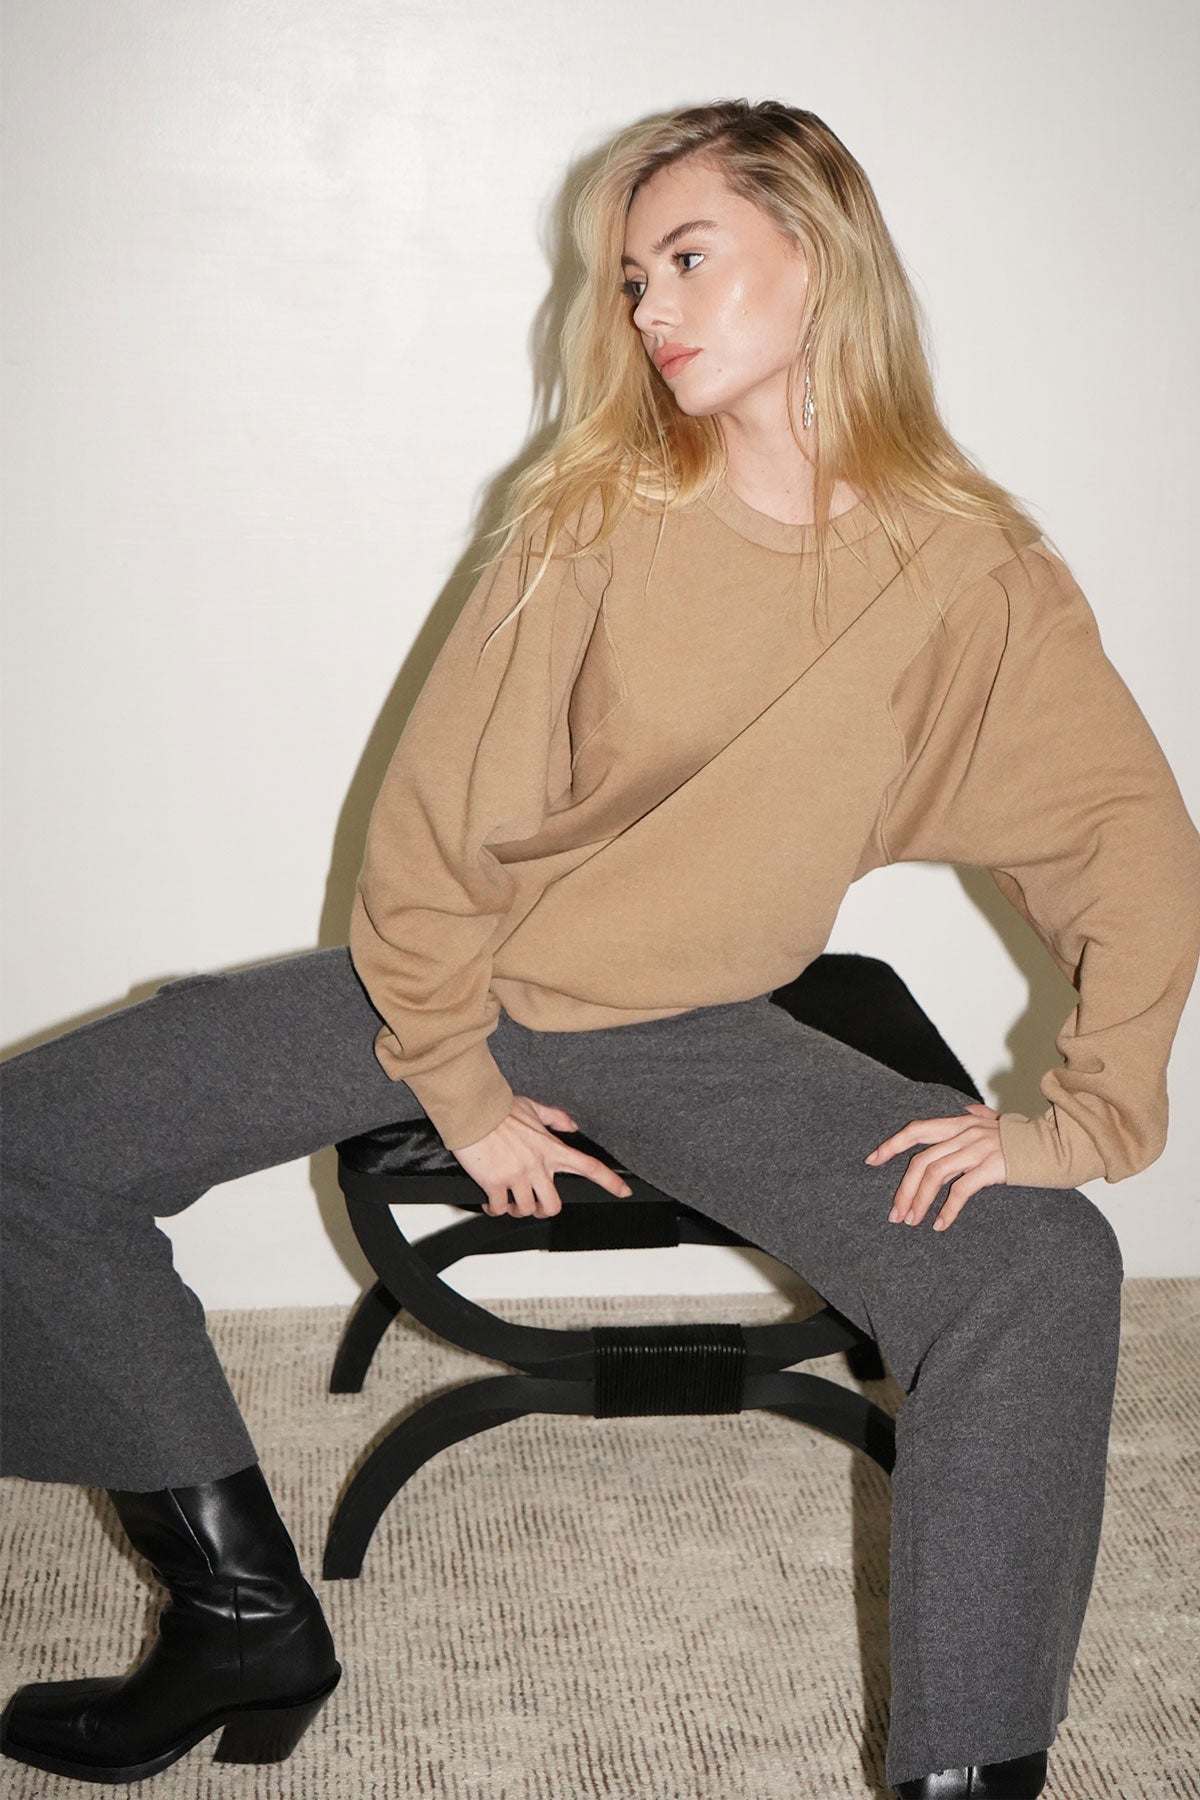 LNA Serra-sweater in Coco